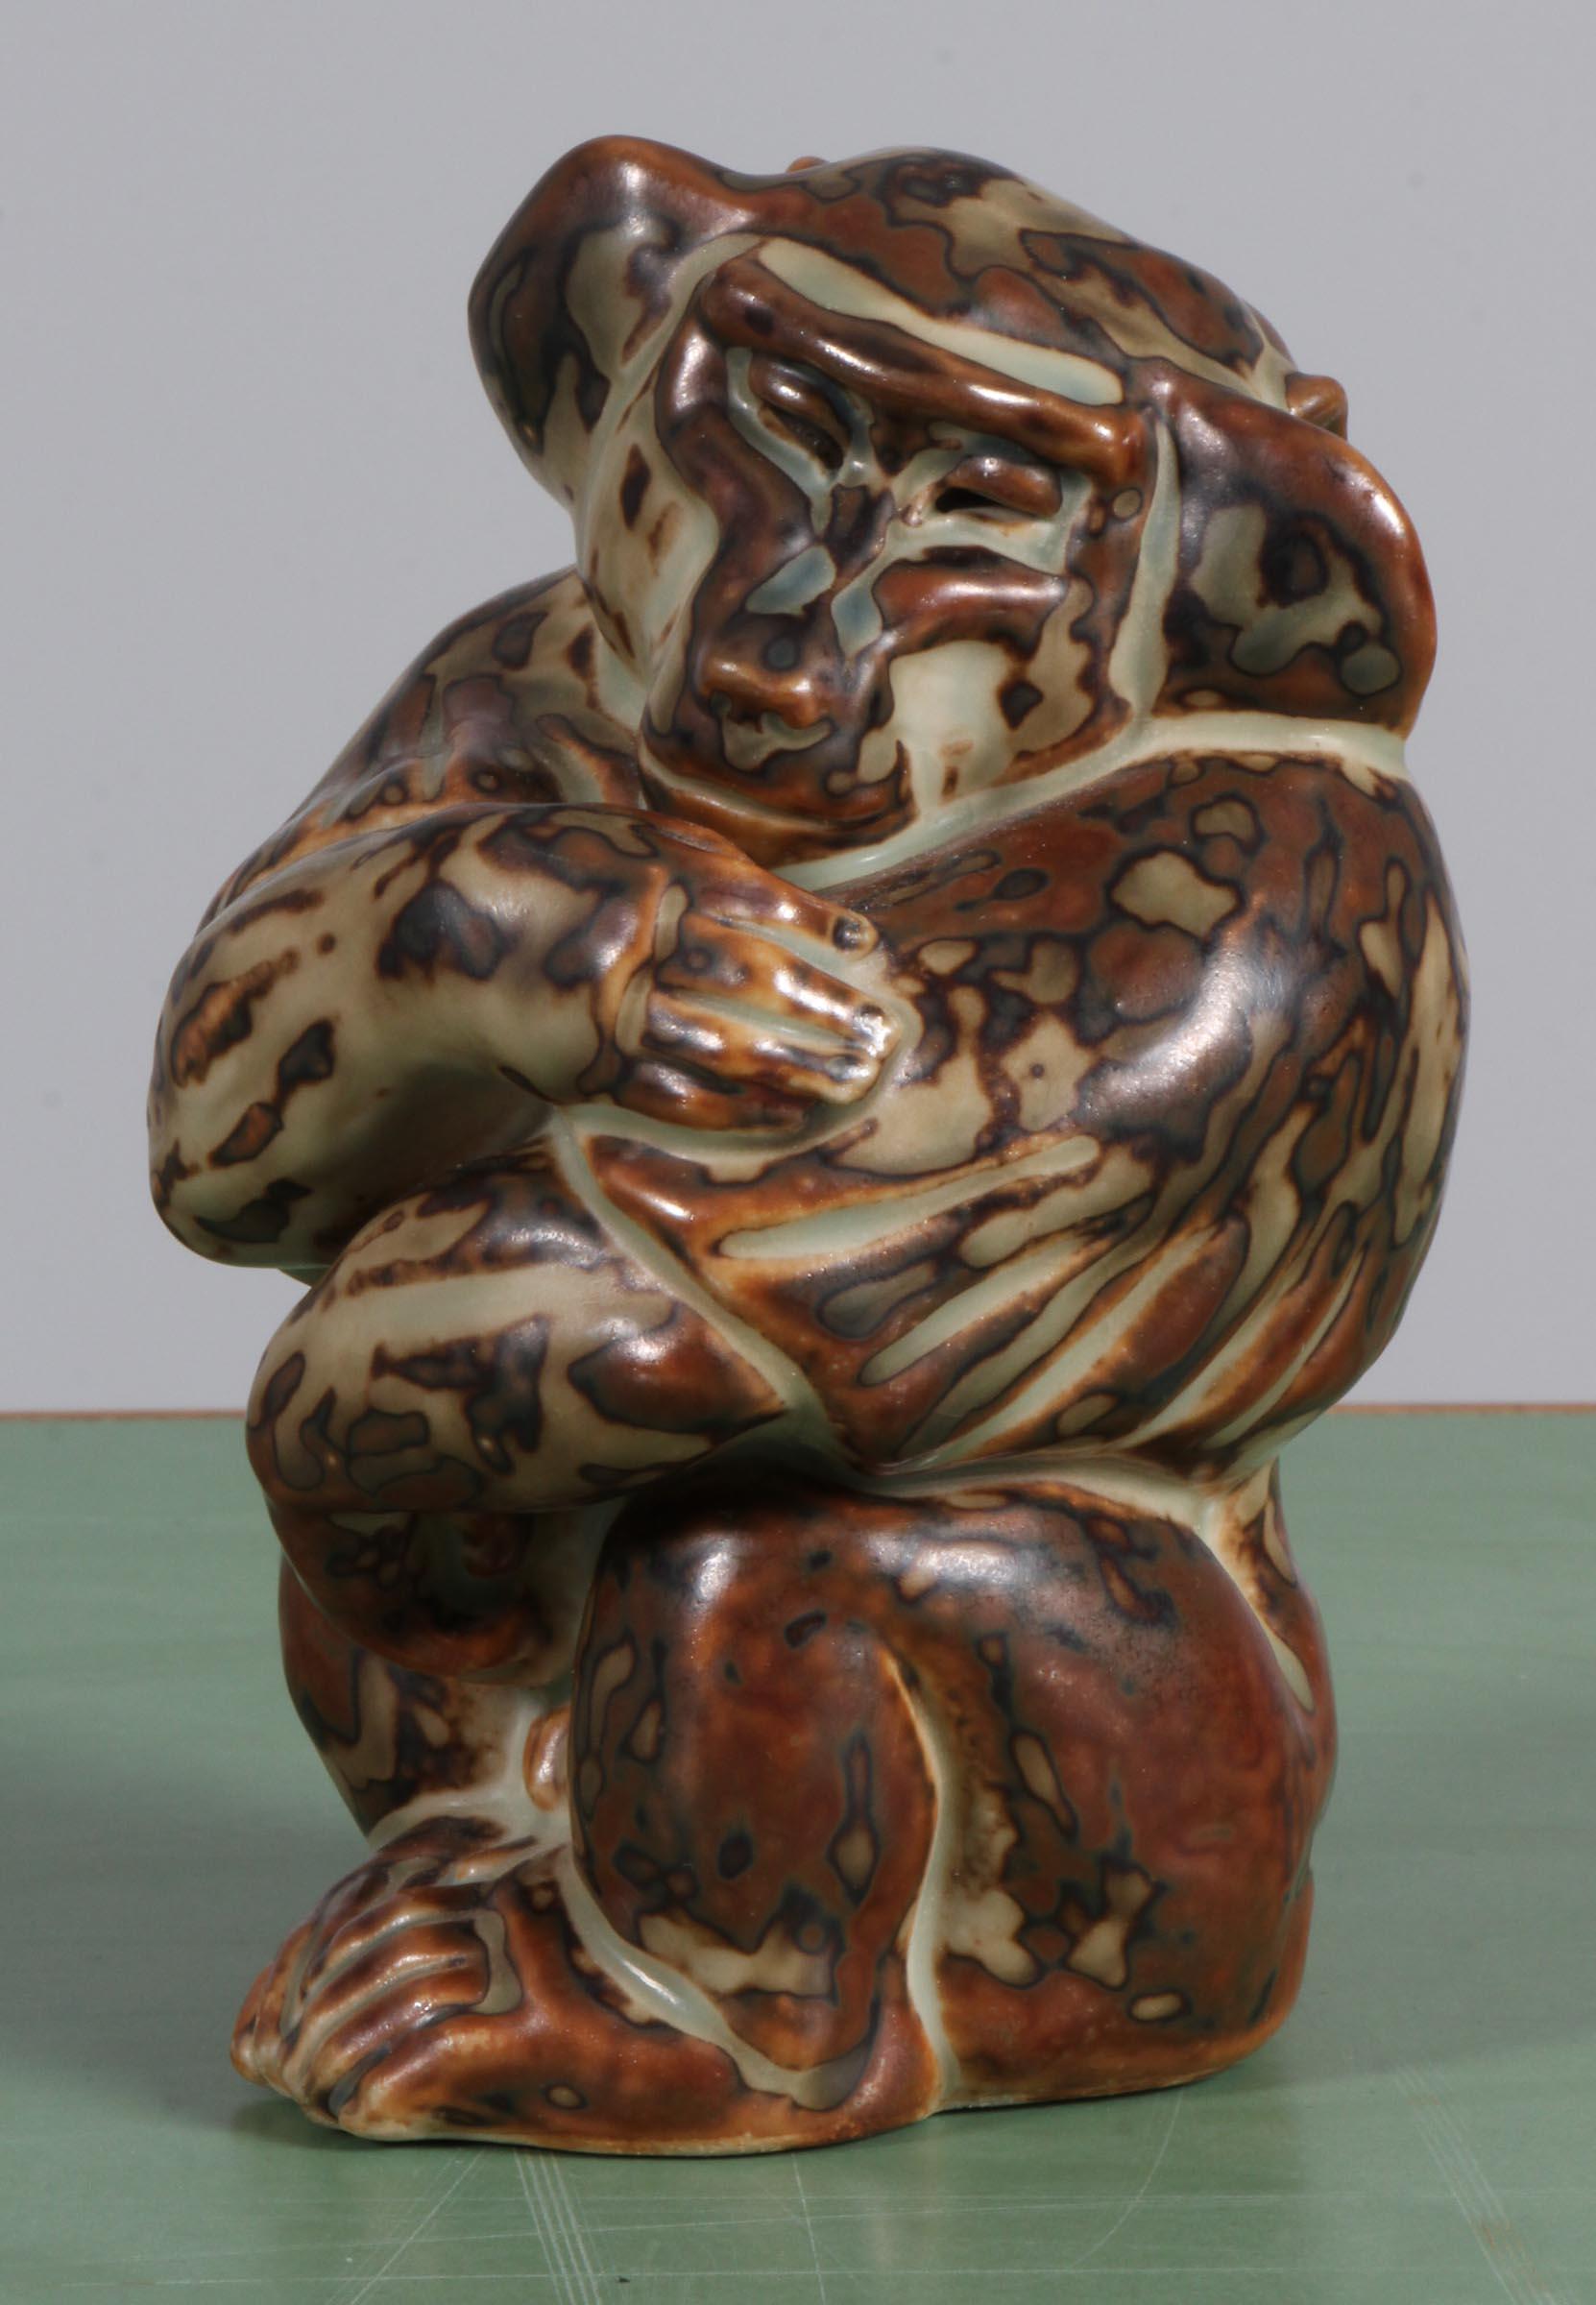 Scandinavian Modern Glazed Stoneware sitting Ape Figurine, Knud Kyhn for Royal Copenhagen #20216